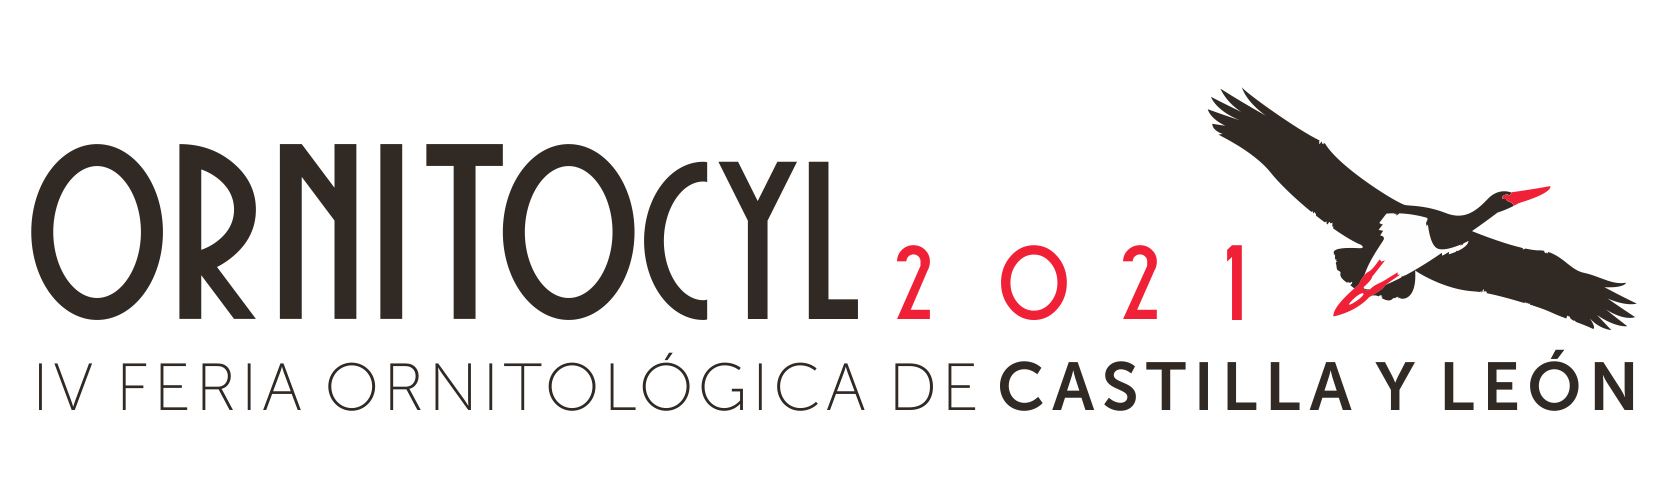 3ª JORNADA DE ORNITOCYL 2021